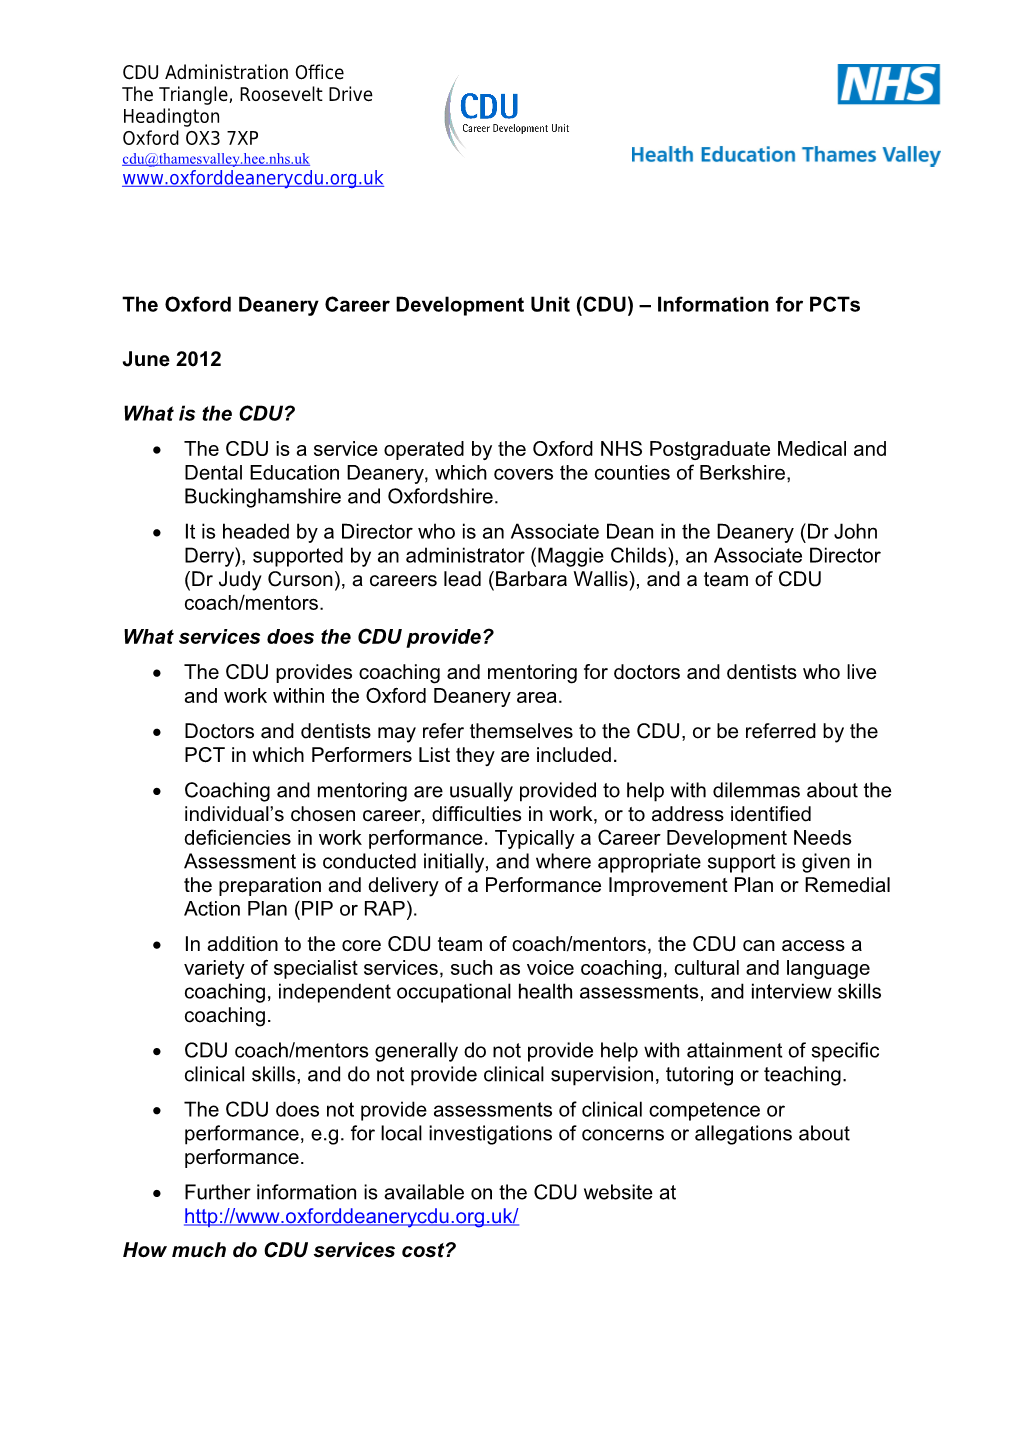 Career Development Needs Assessment Report